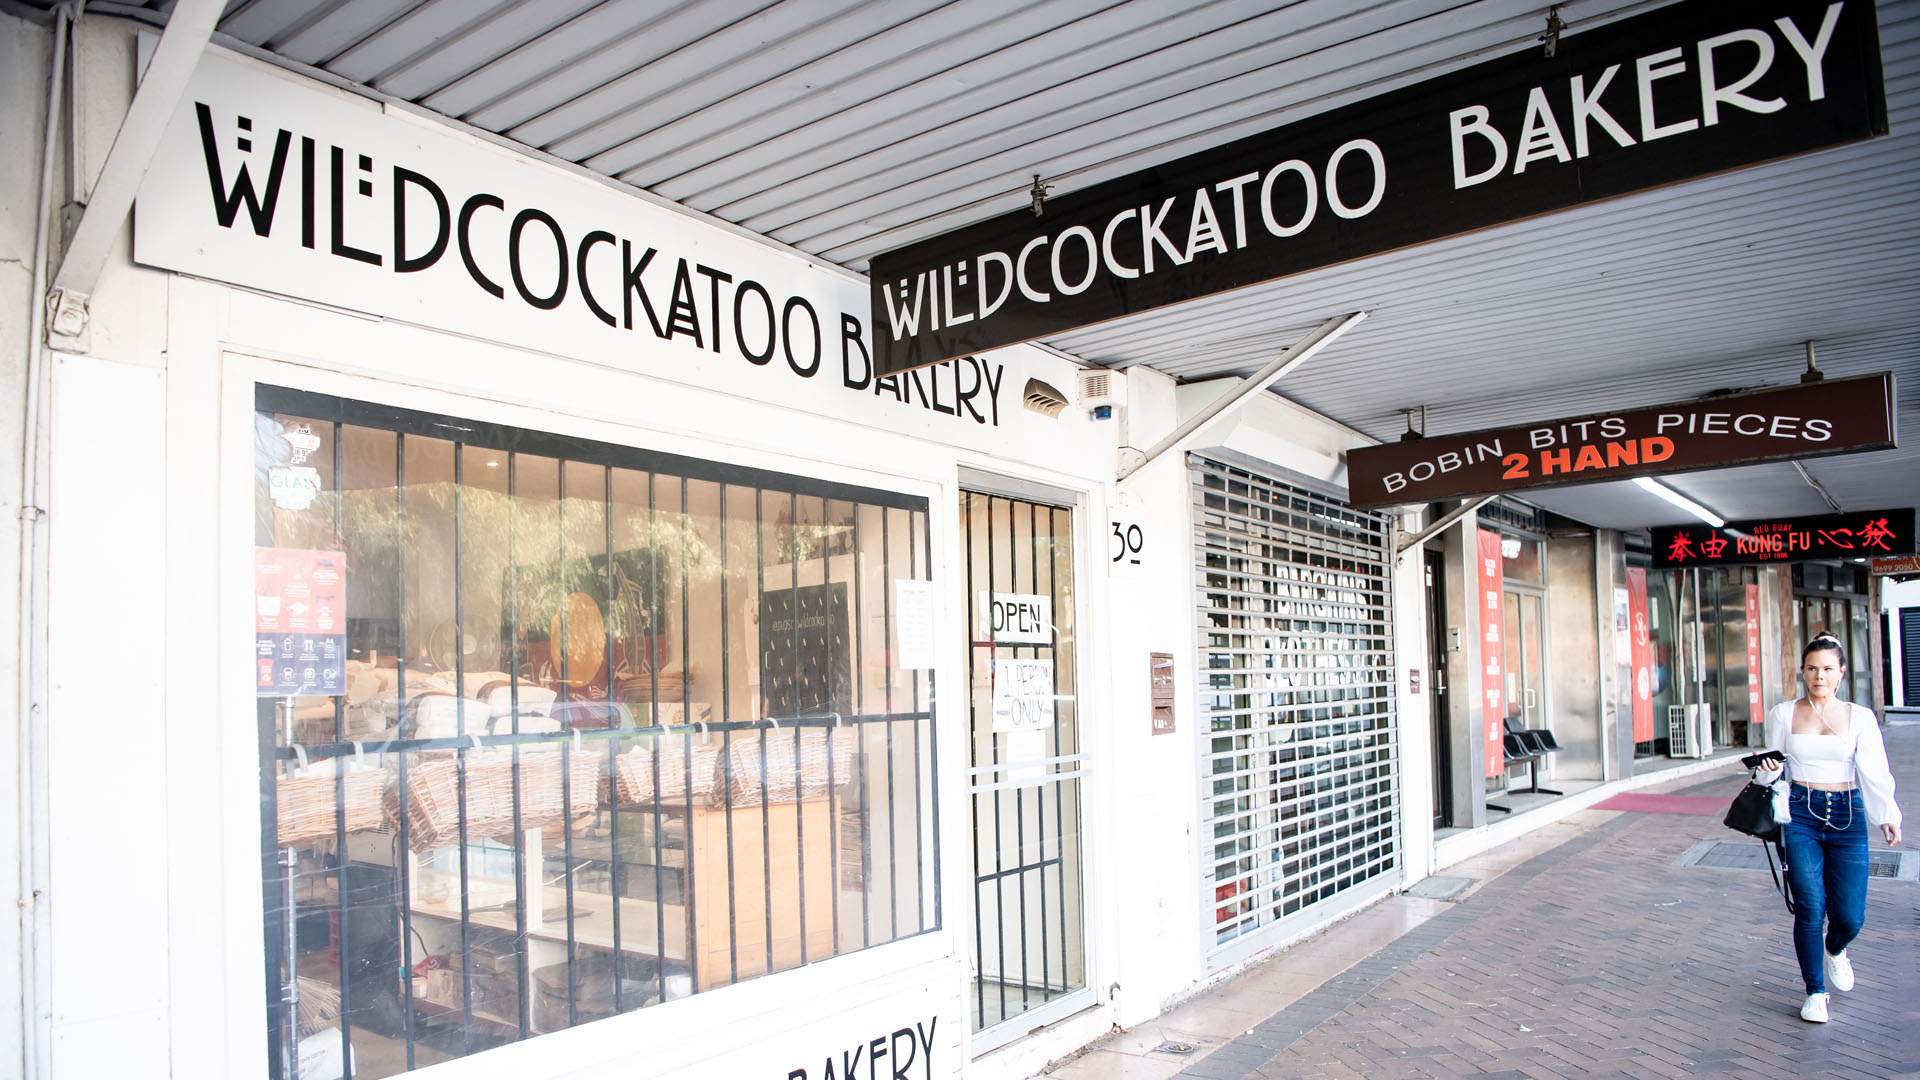 Wild Cockatoo Bakery